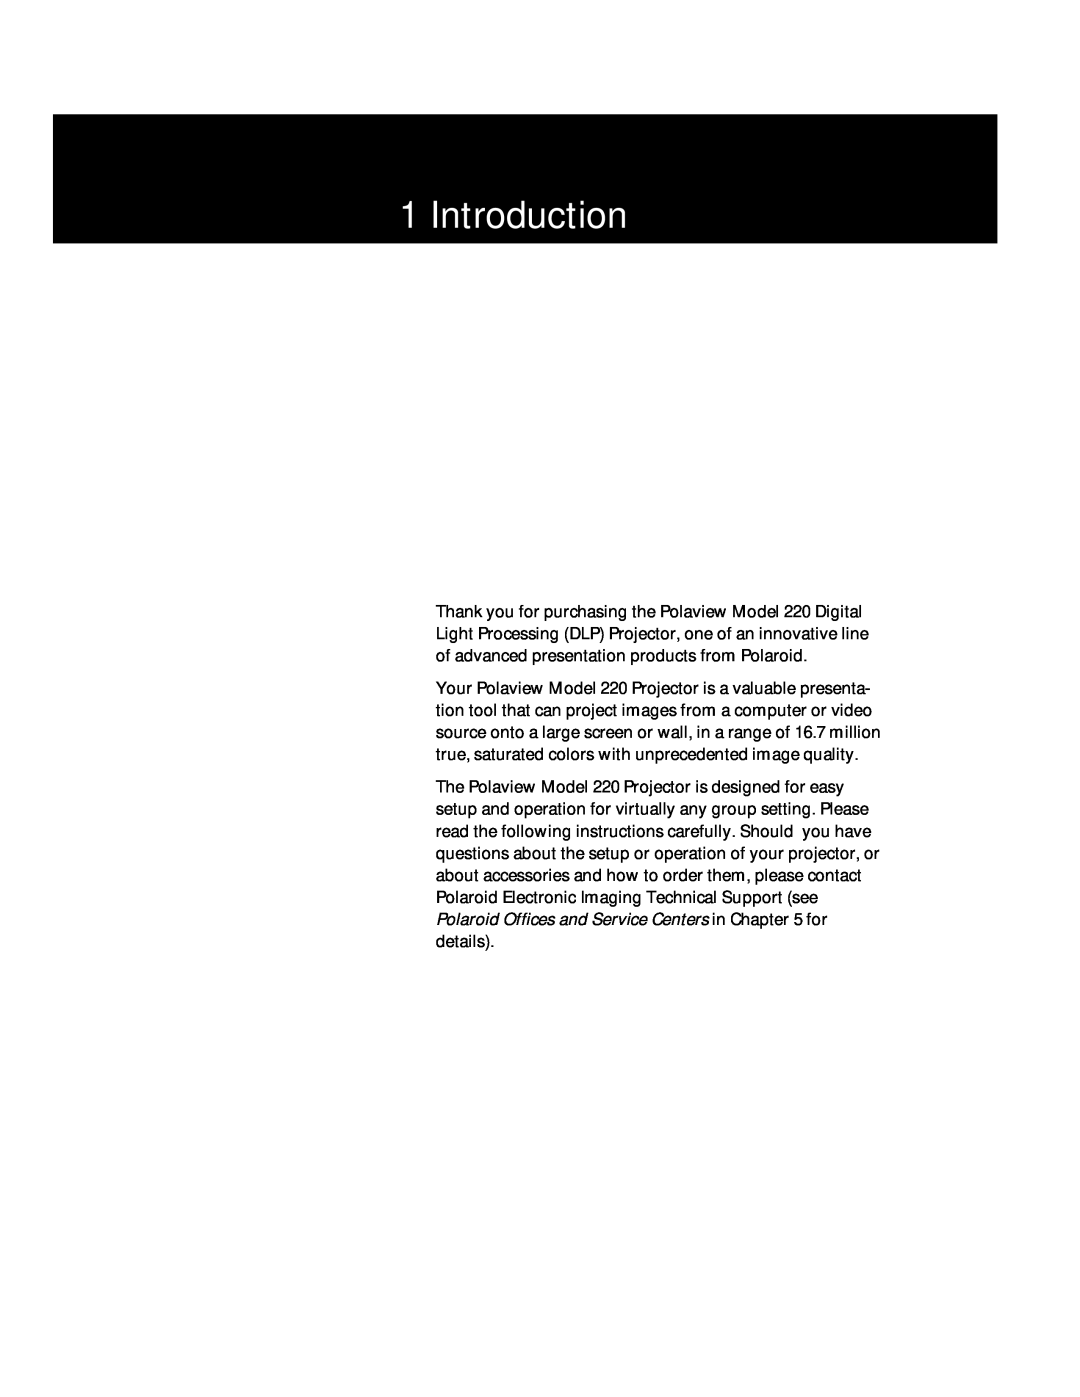 Polaroid Polaview 220 manual Introduction 